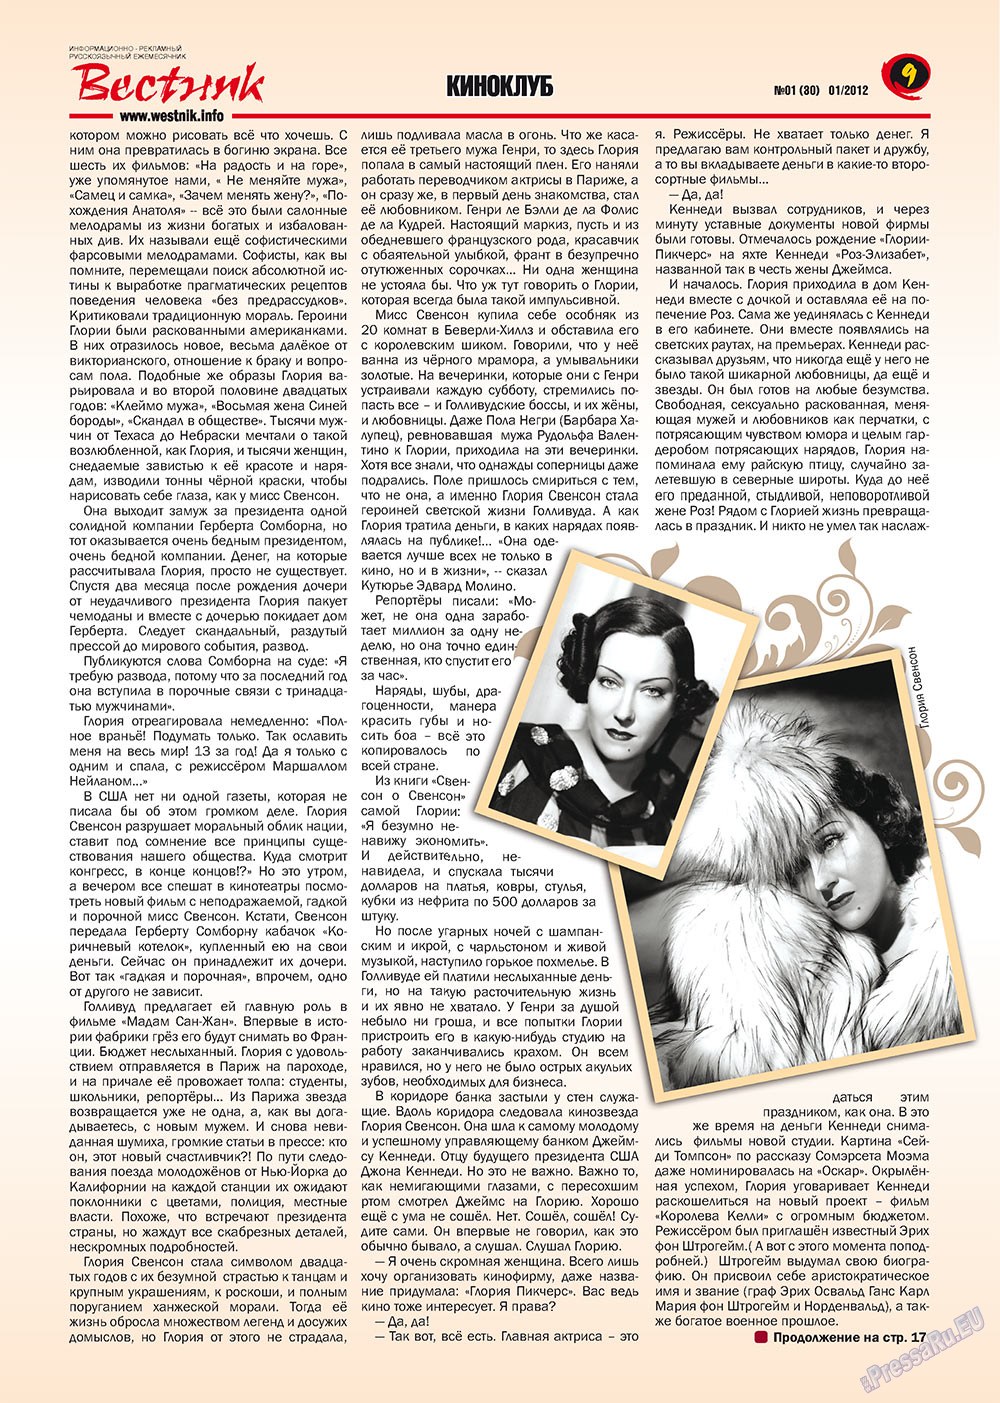 Вестник-info (журнал). 2012 год, номер 1, стр. 9